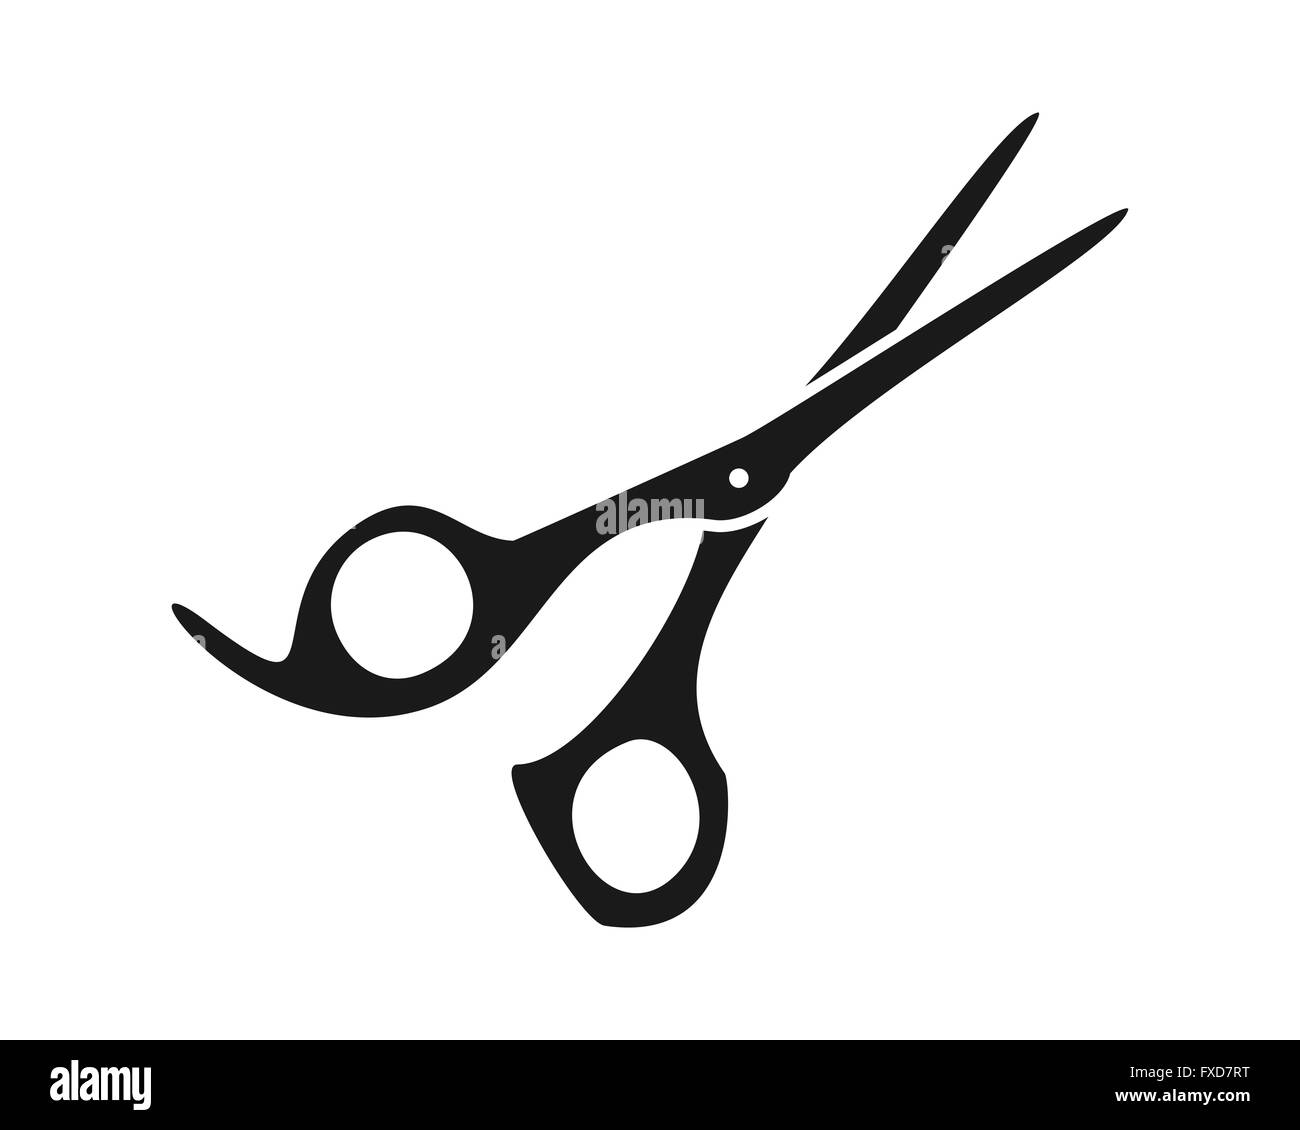 Hairdresser Scissor Stock Photo